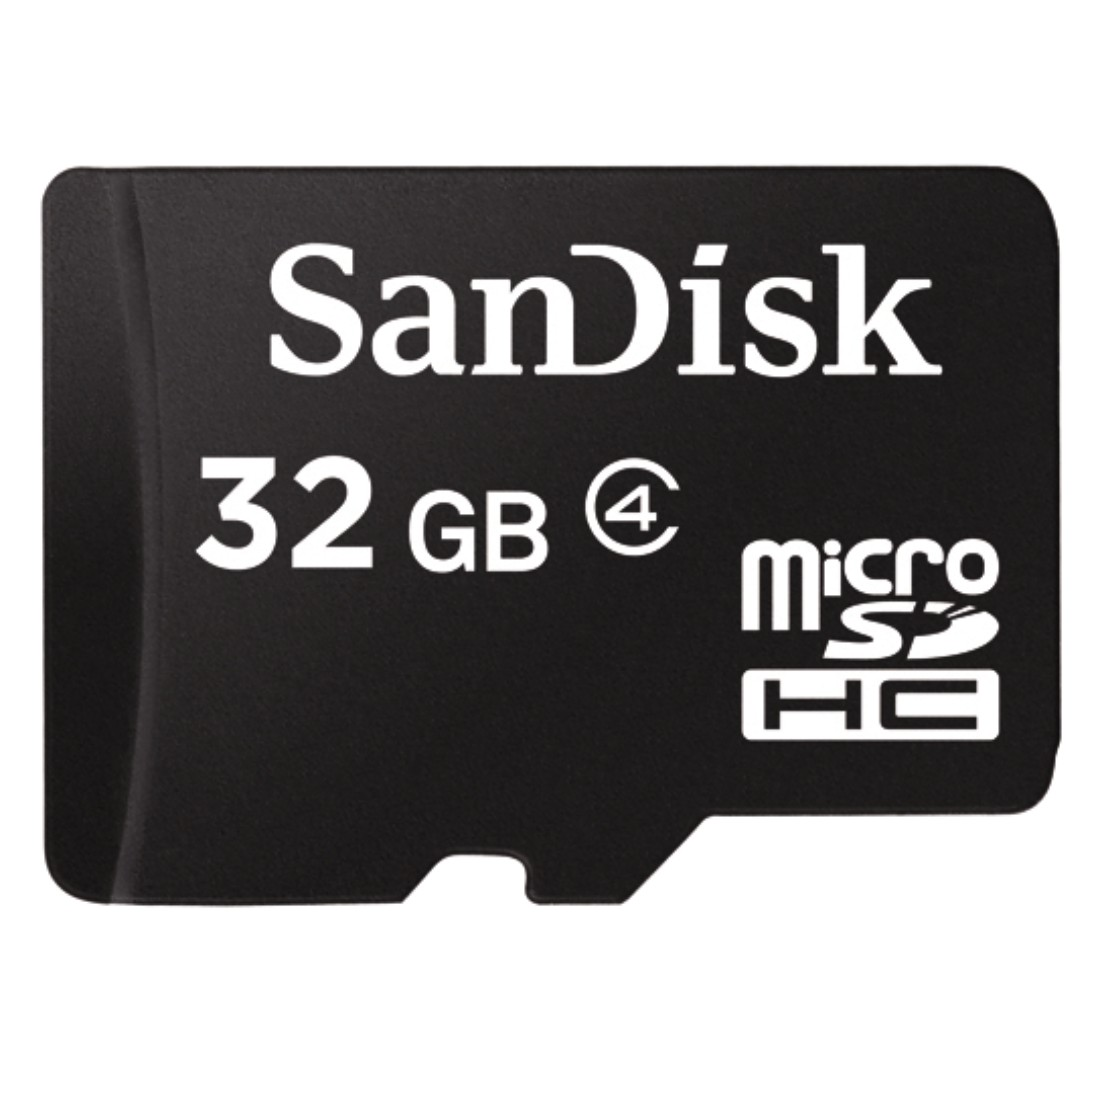 Class 32 SANDISK 4, GB Micro-SDHC Speicherkarte,